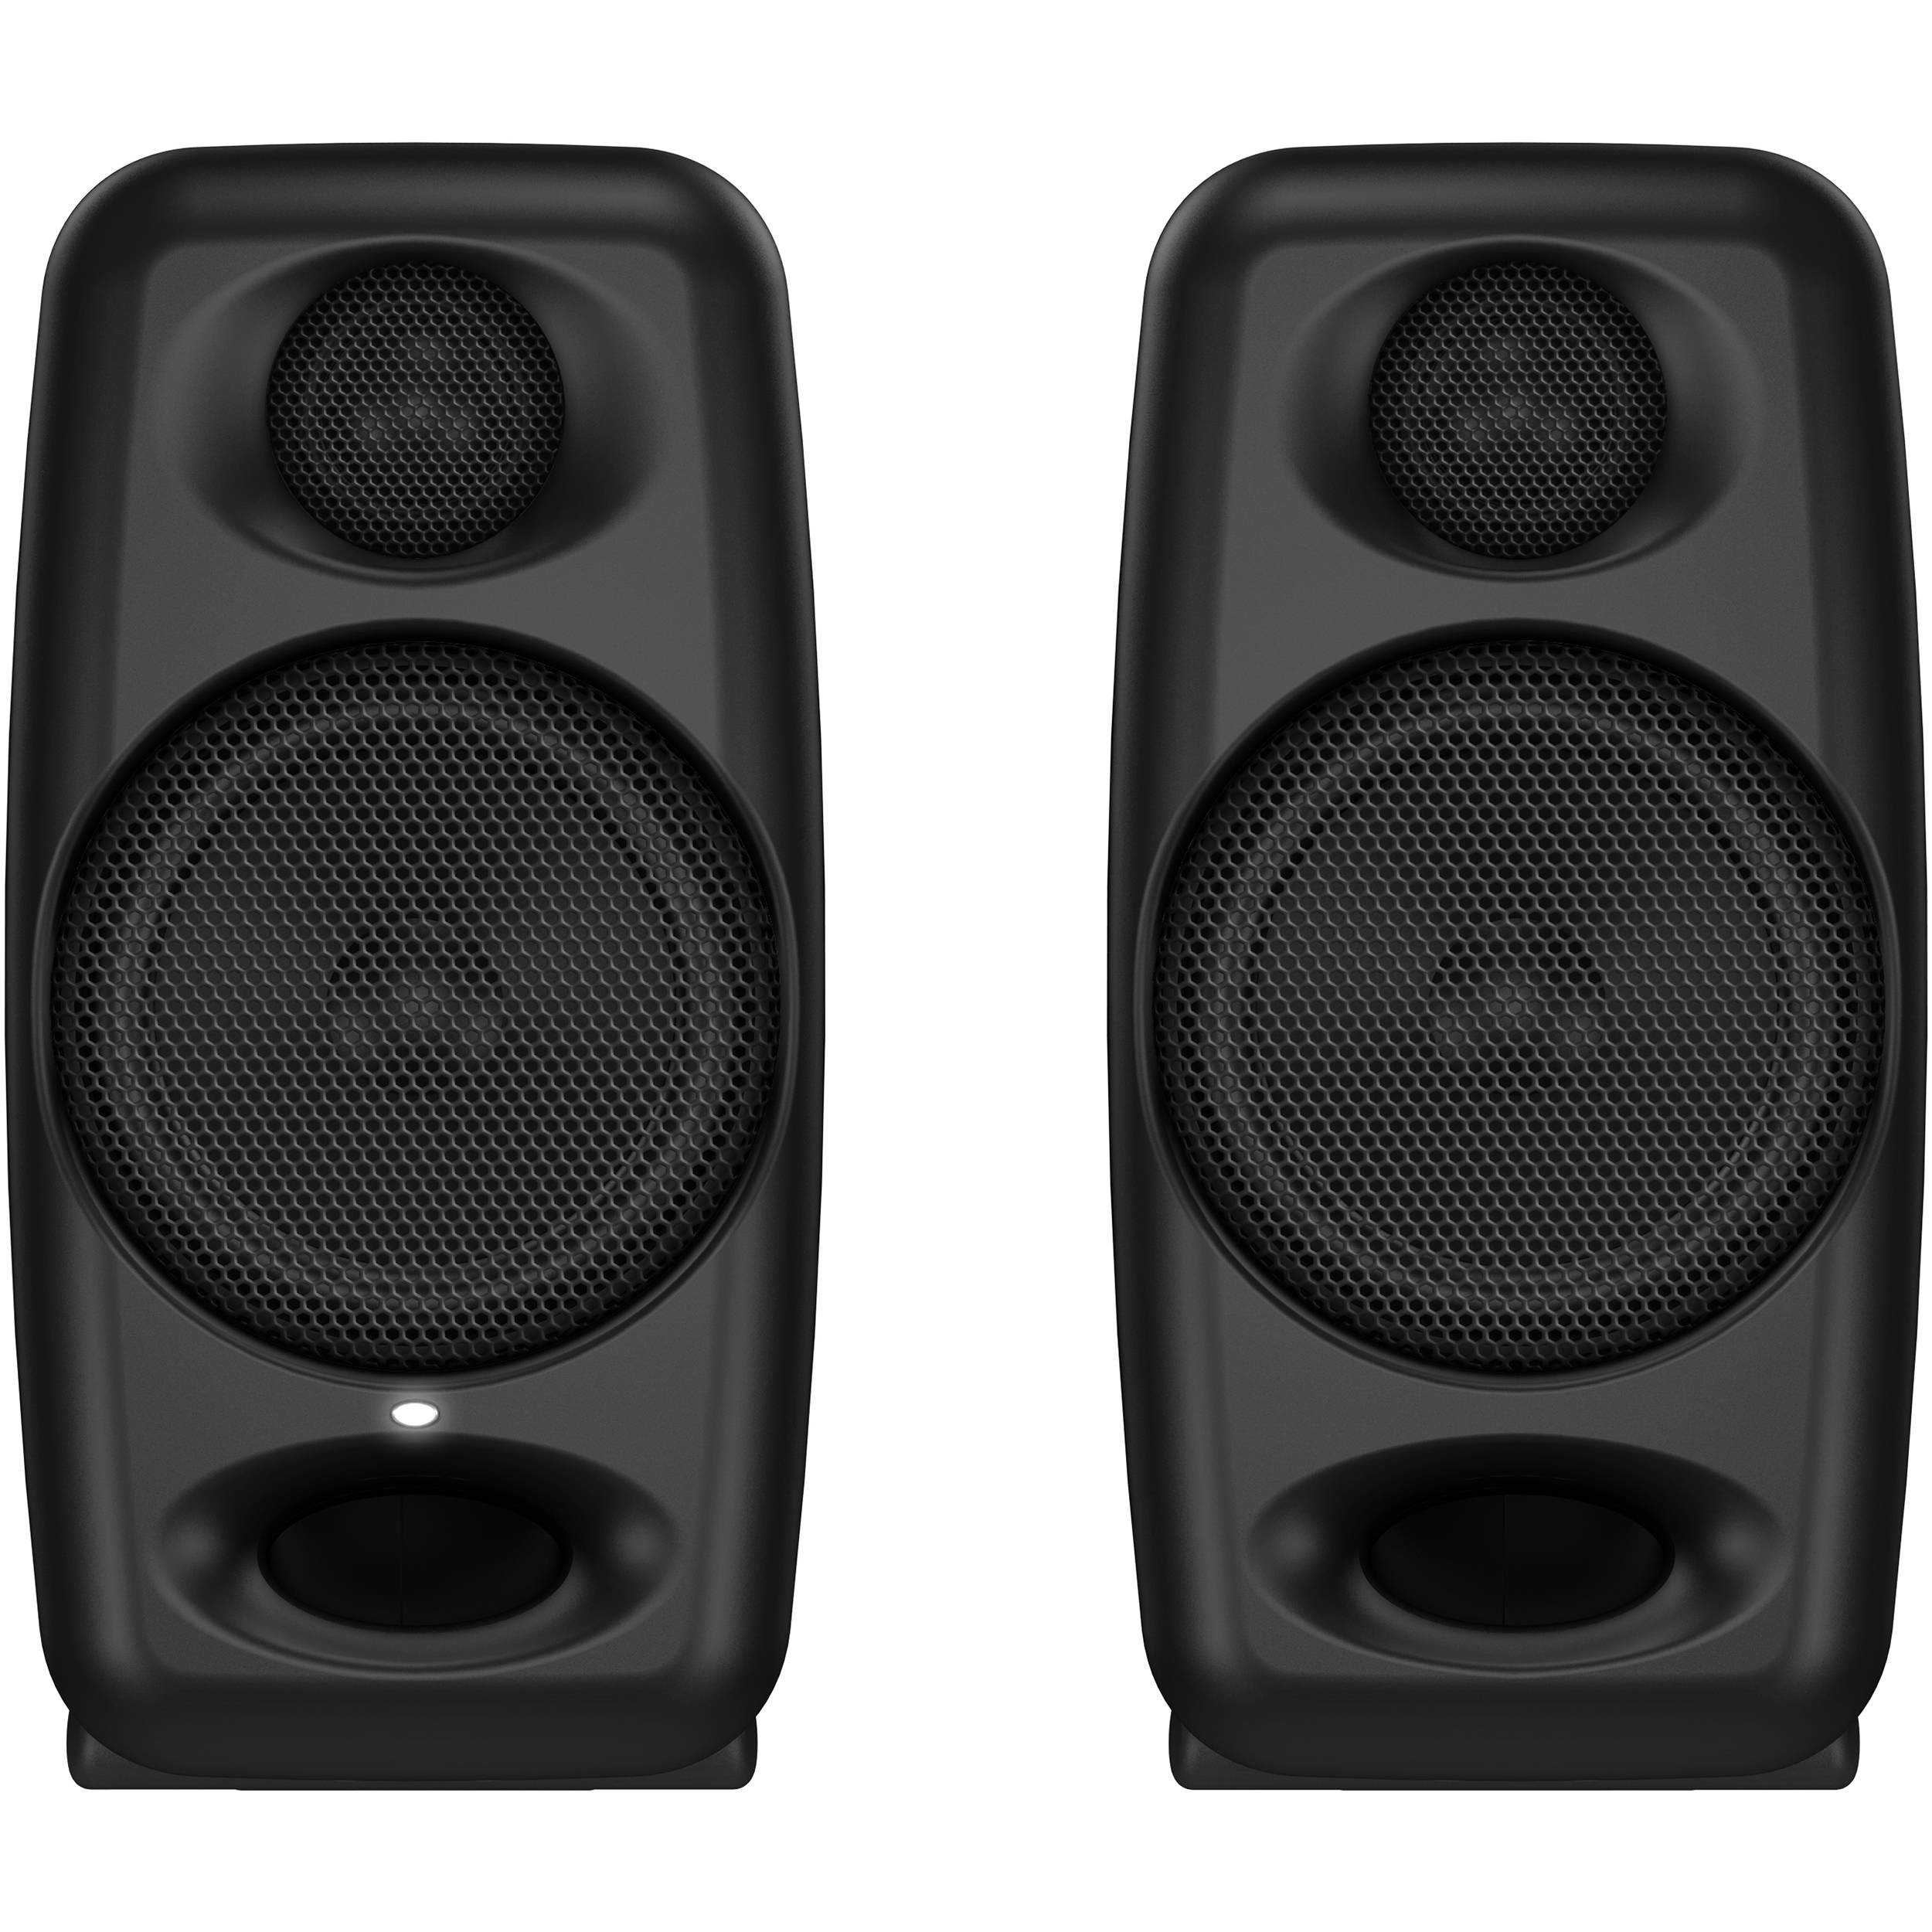 Iloud Monitor Speakers Cheap Sale, 57% OFF | espirituviajero.com